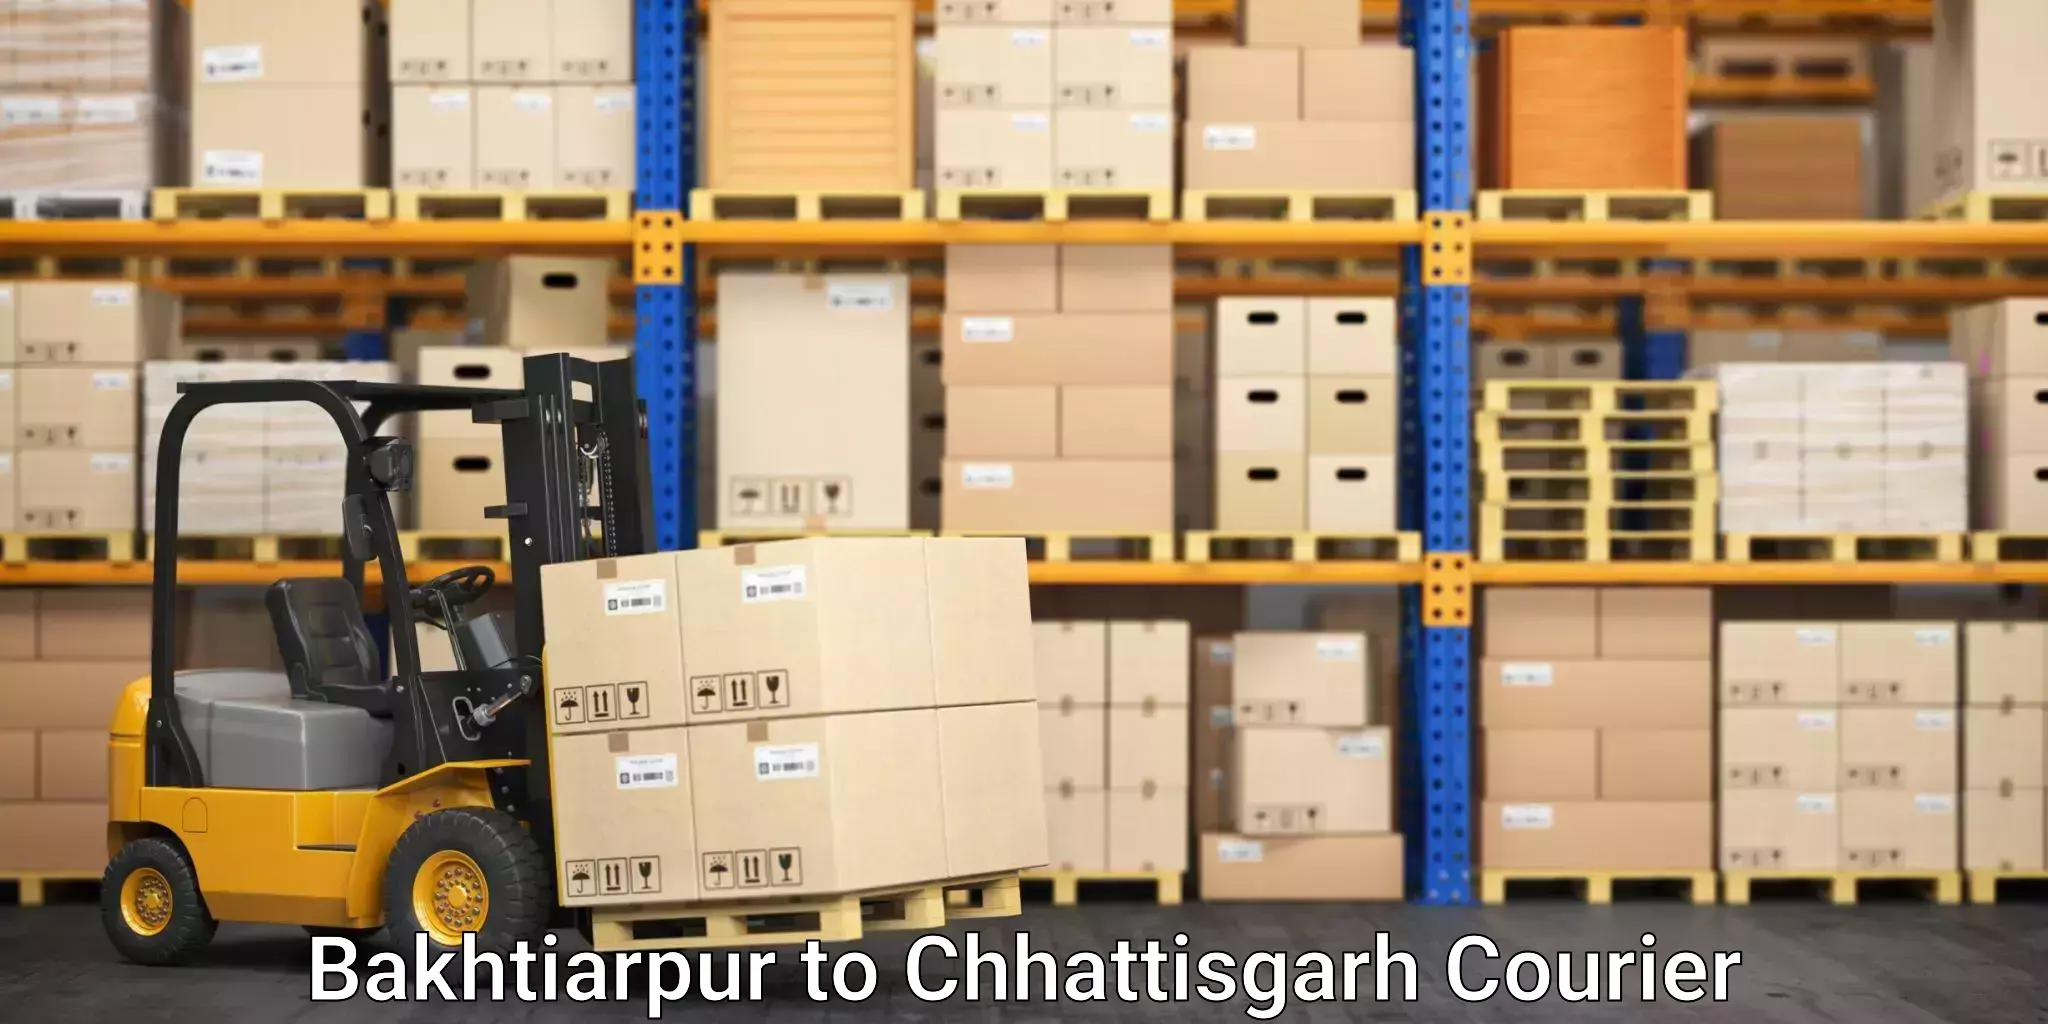 Cost-effective moving options Bakhtiarpur to Patna Chhattisgarh